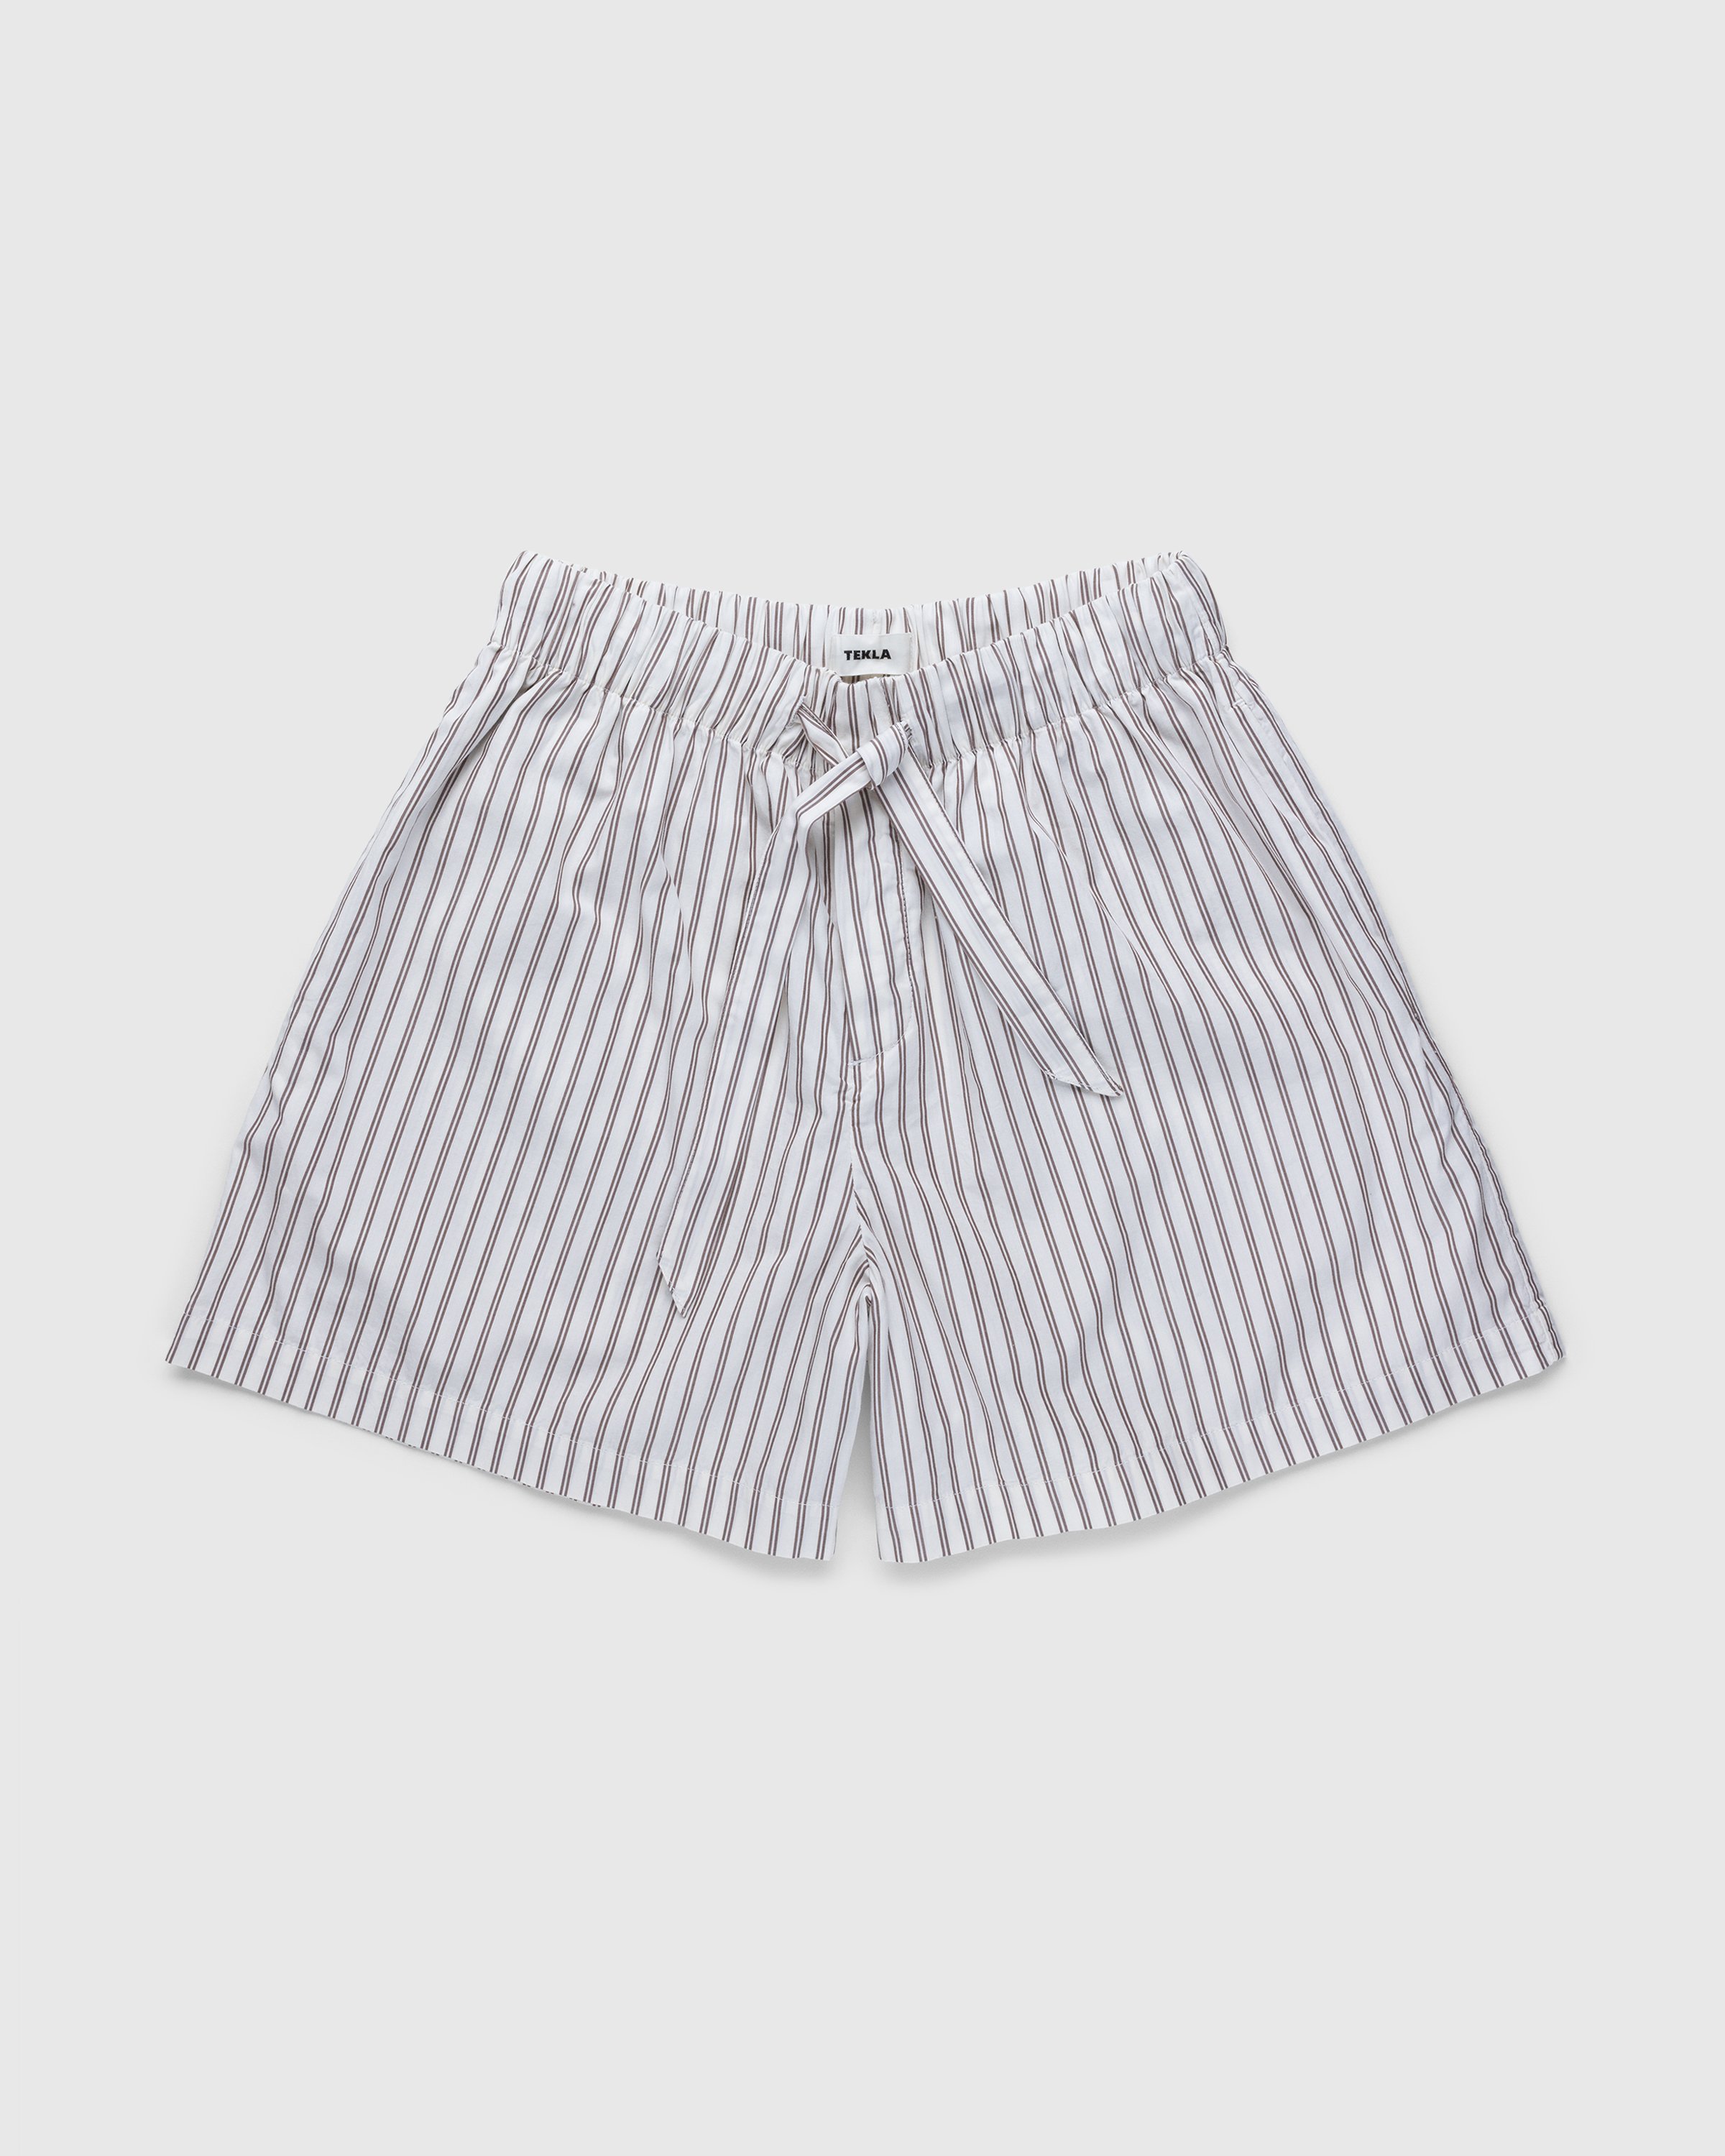 Tekla - Cotton Poplin Pyjamas Shorts Hopper Stripes - Clothing - Beige - Image 1